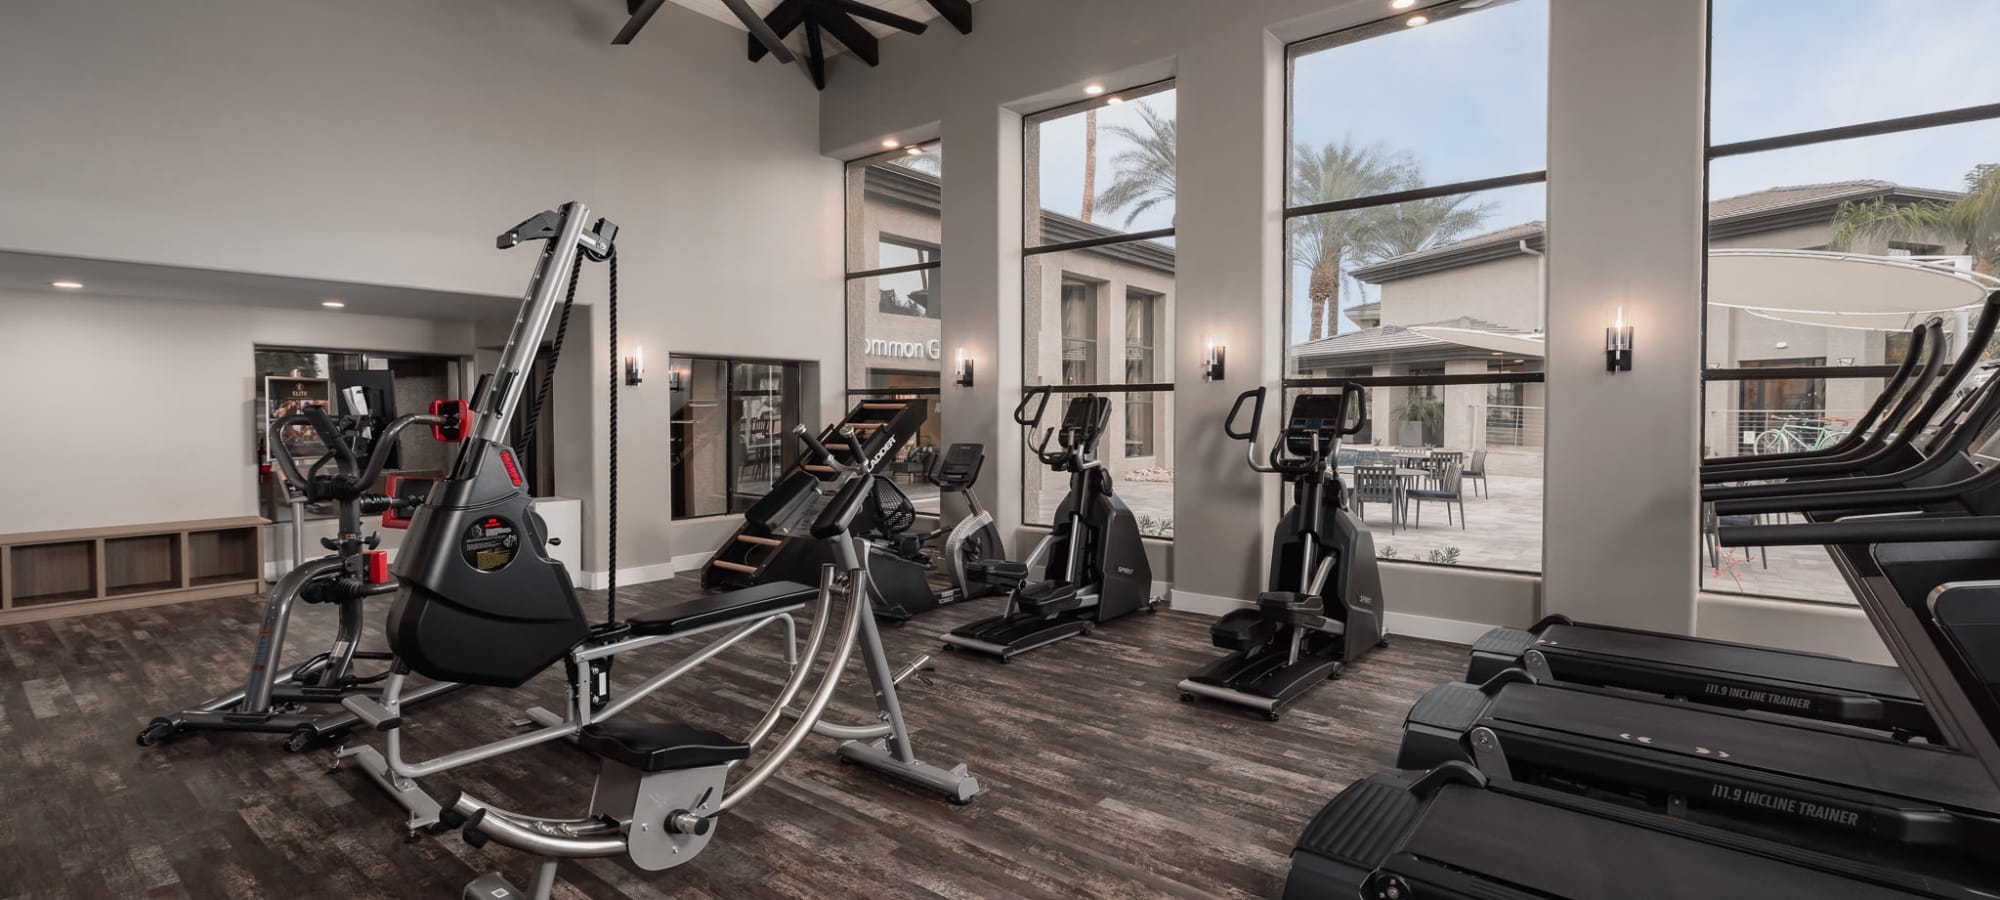 Cardio machines in the fitness center at Elite North Scottsdale in Scottsdale, Arizona